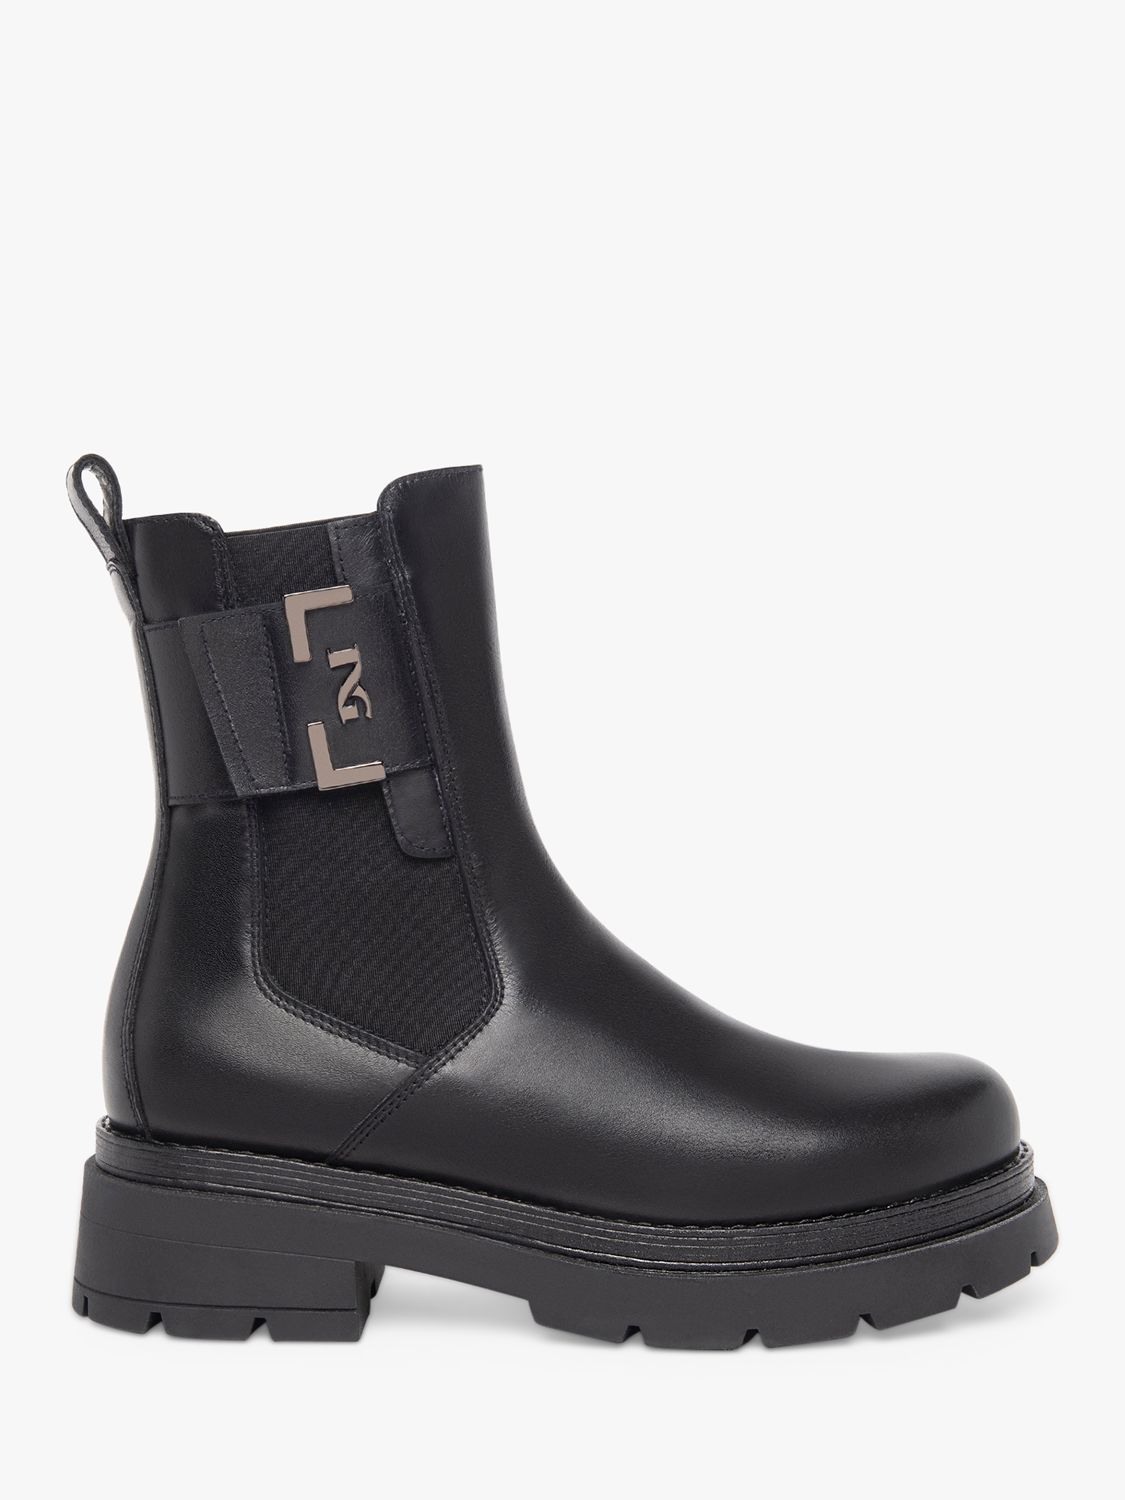 NeroGiardini Chelsea Leather Boots, Black at John Lewis & Partners